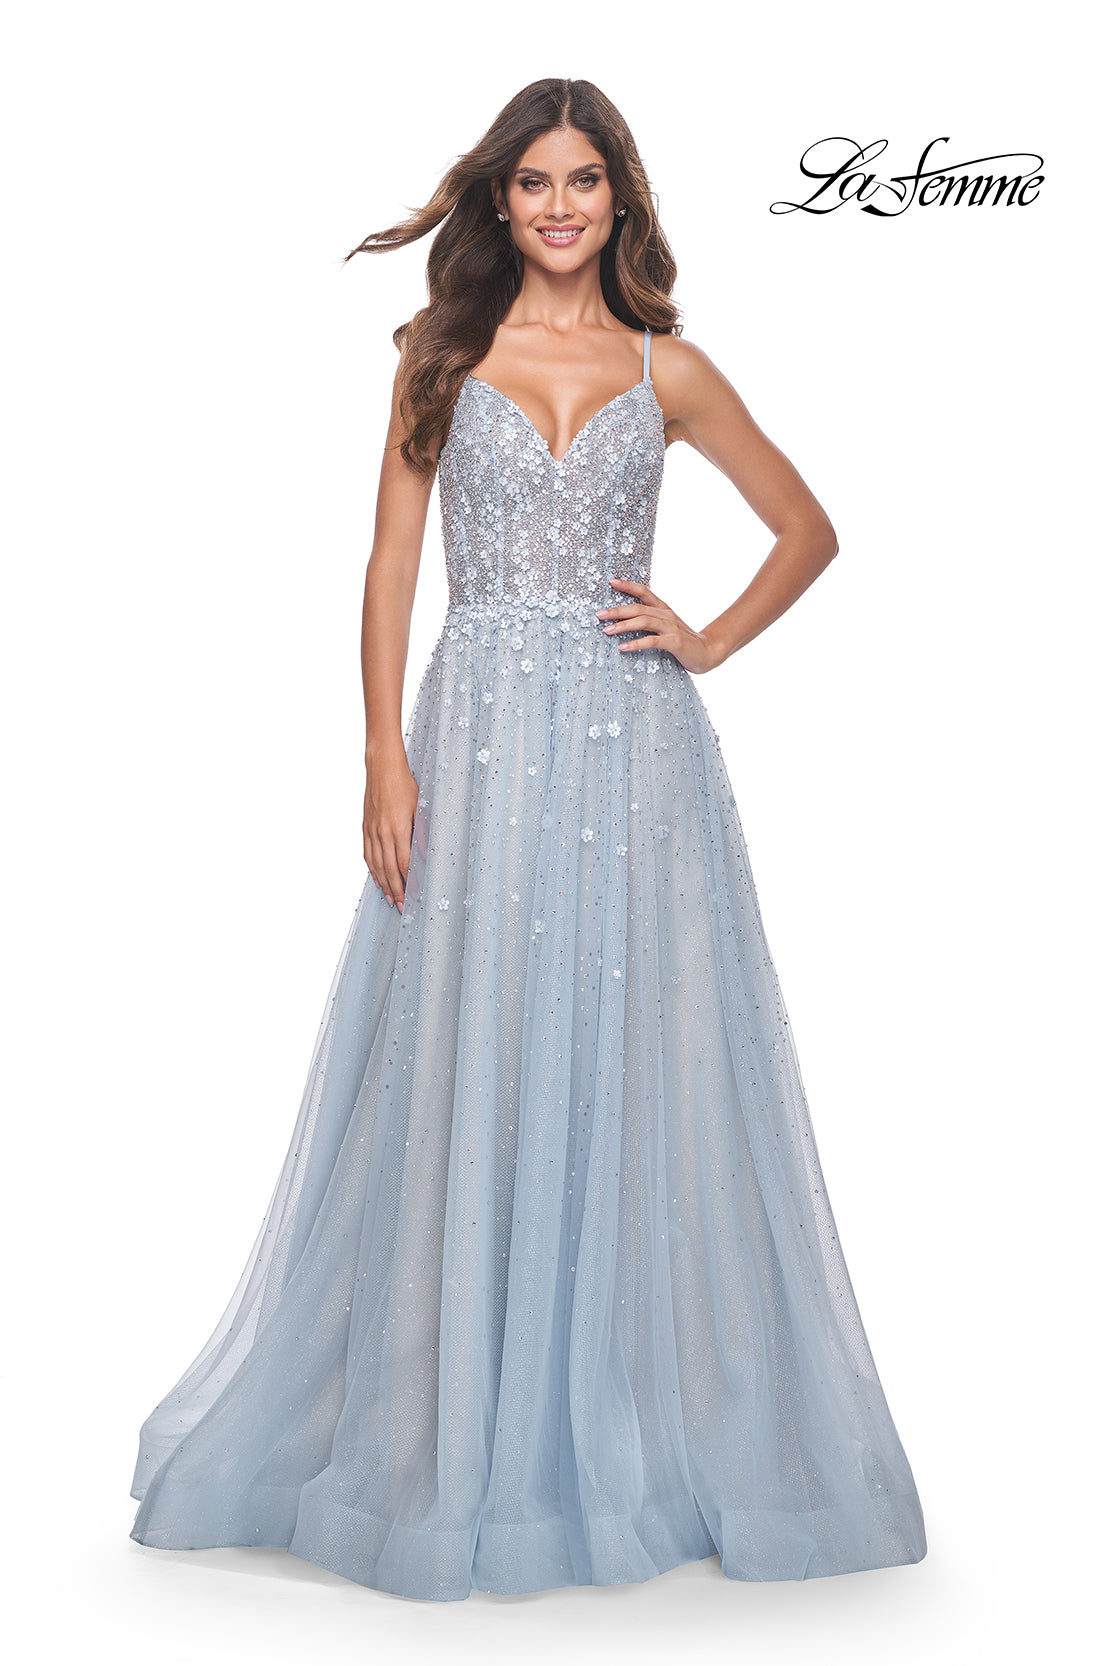 La-Femme-32215-V-Neck-Neckline-Zipper-Back-Corset-Lace-Tulle-A-Line-Light-Blue-Evening-Dress-B-Chic-Fashions-Prom-Dress